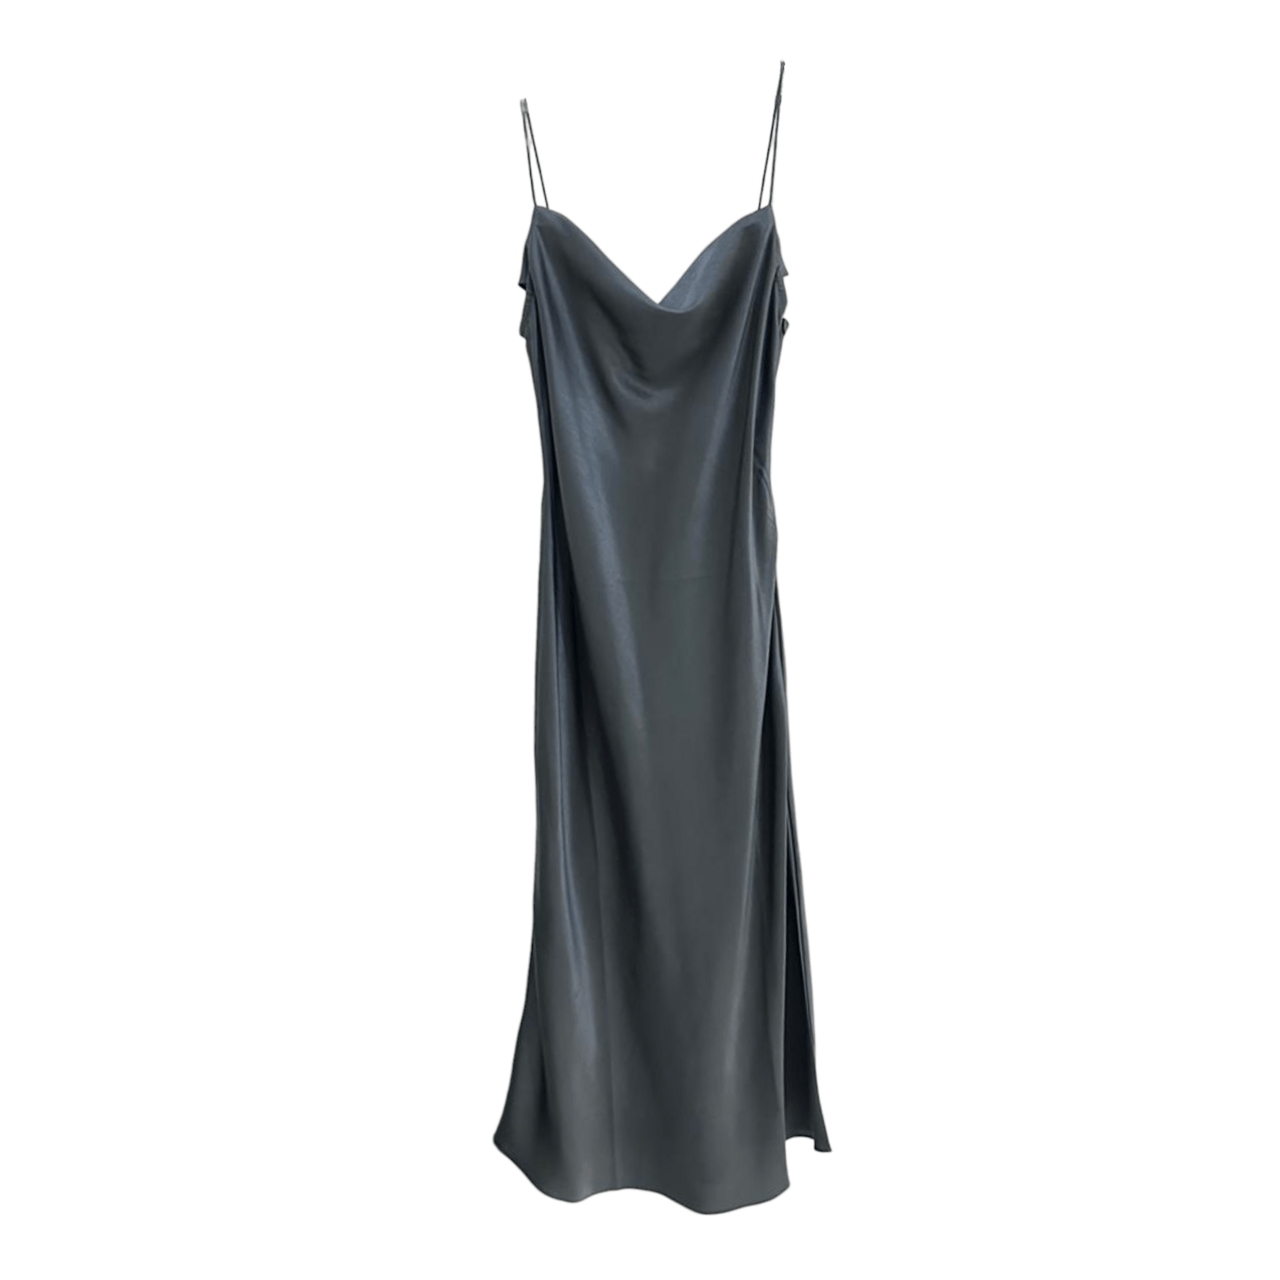 Pafon Dark Grey Scarlette Long Dress